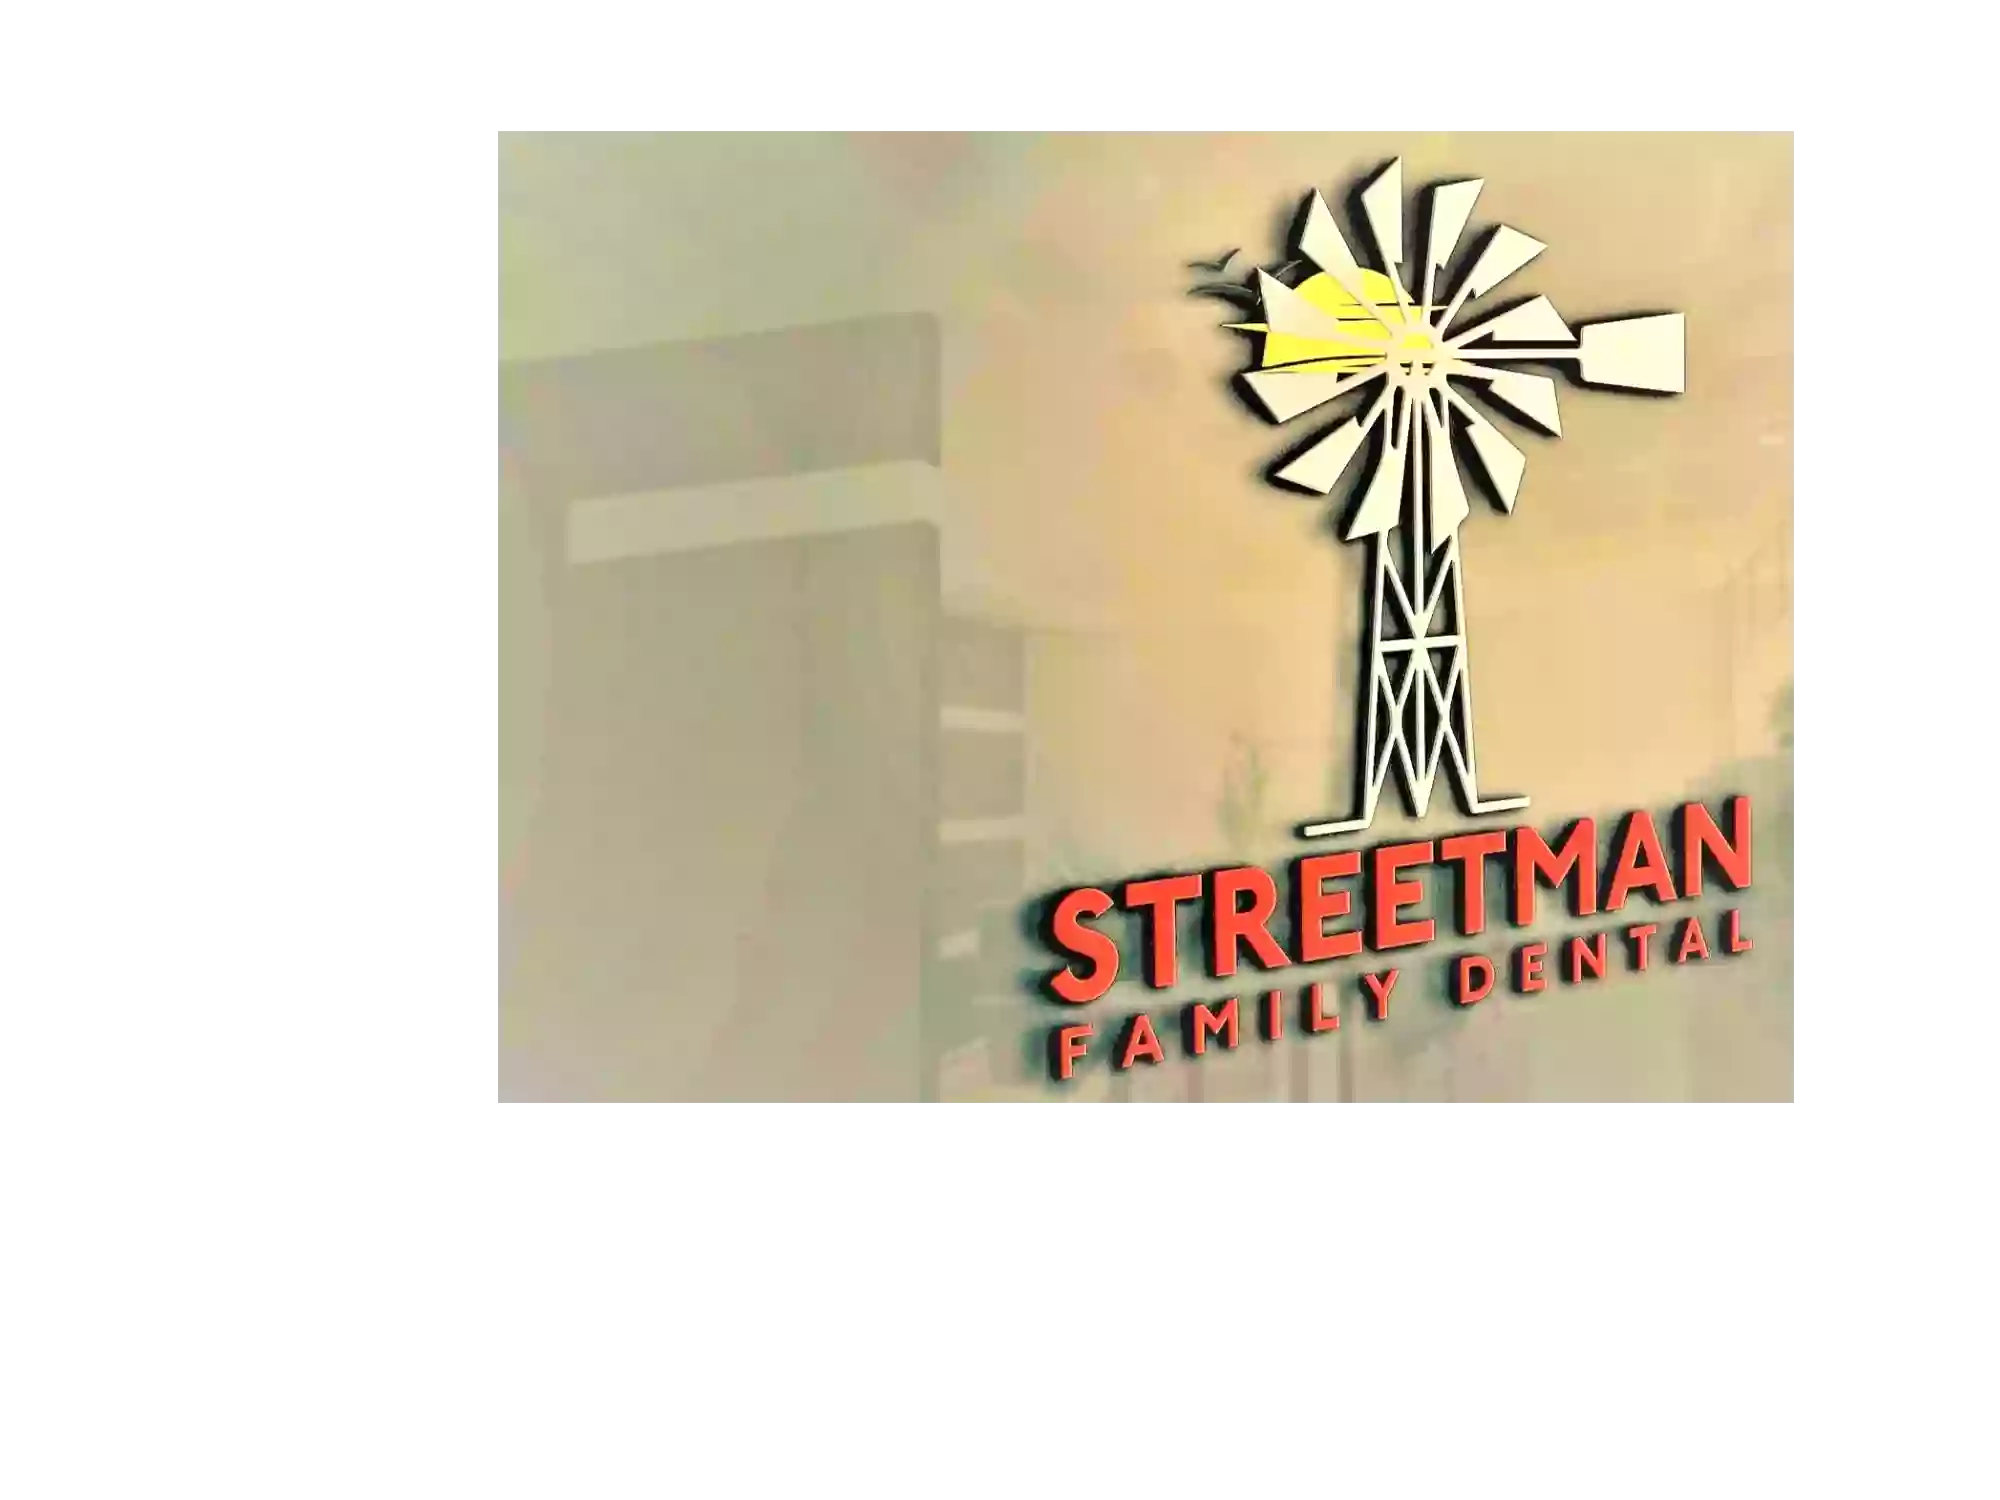 Streetman Family Dental